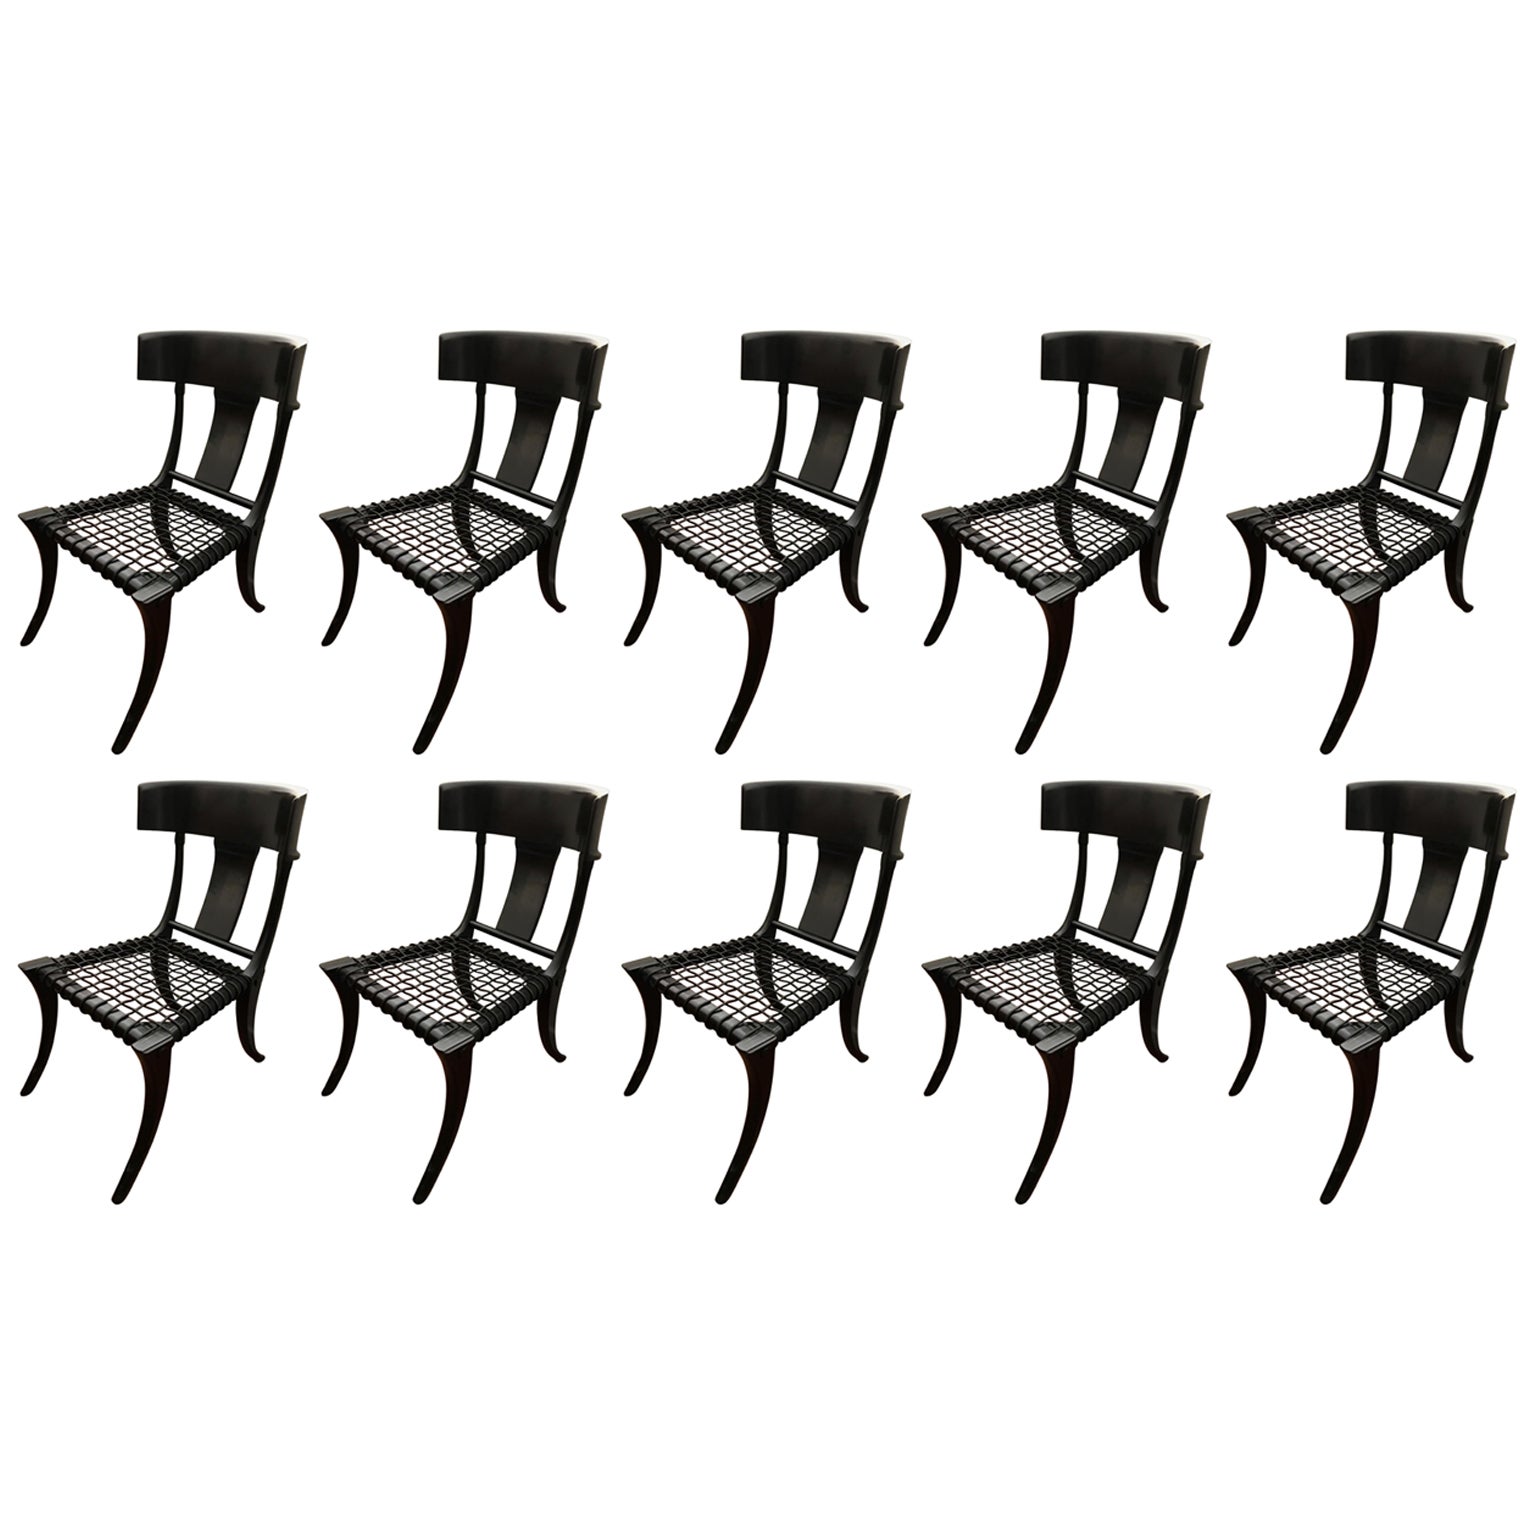 Black Woven Leather Seat Walnut Saber Legs Klismos Chairs Customizable Set of 10